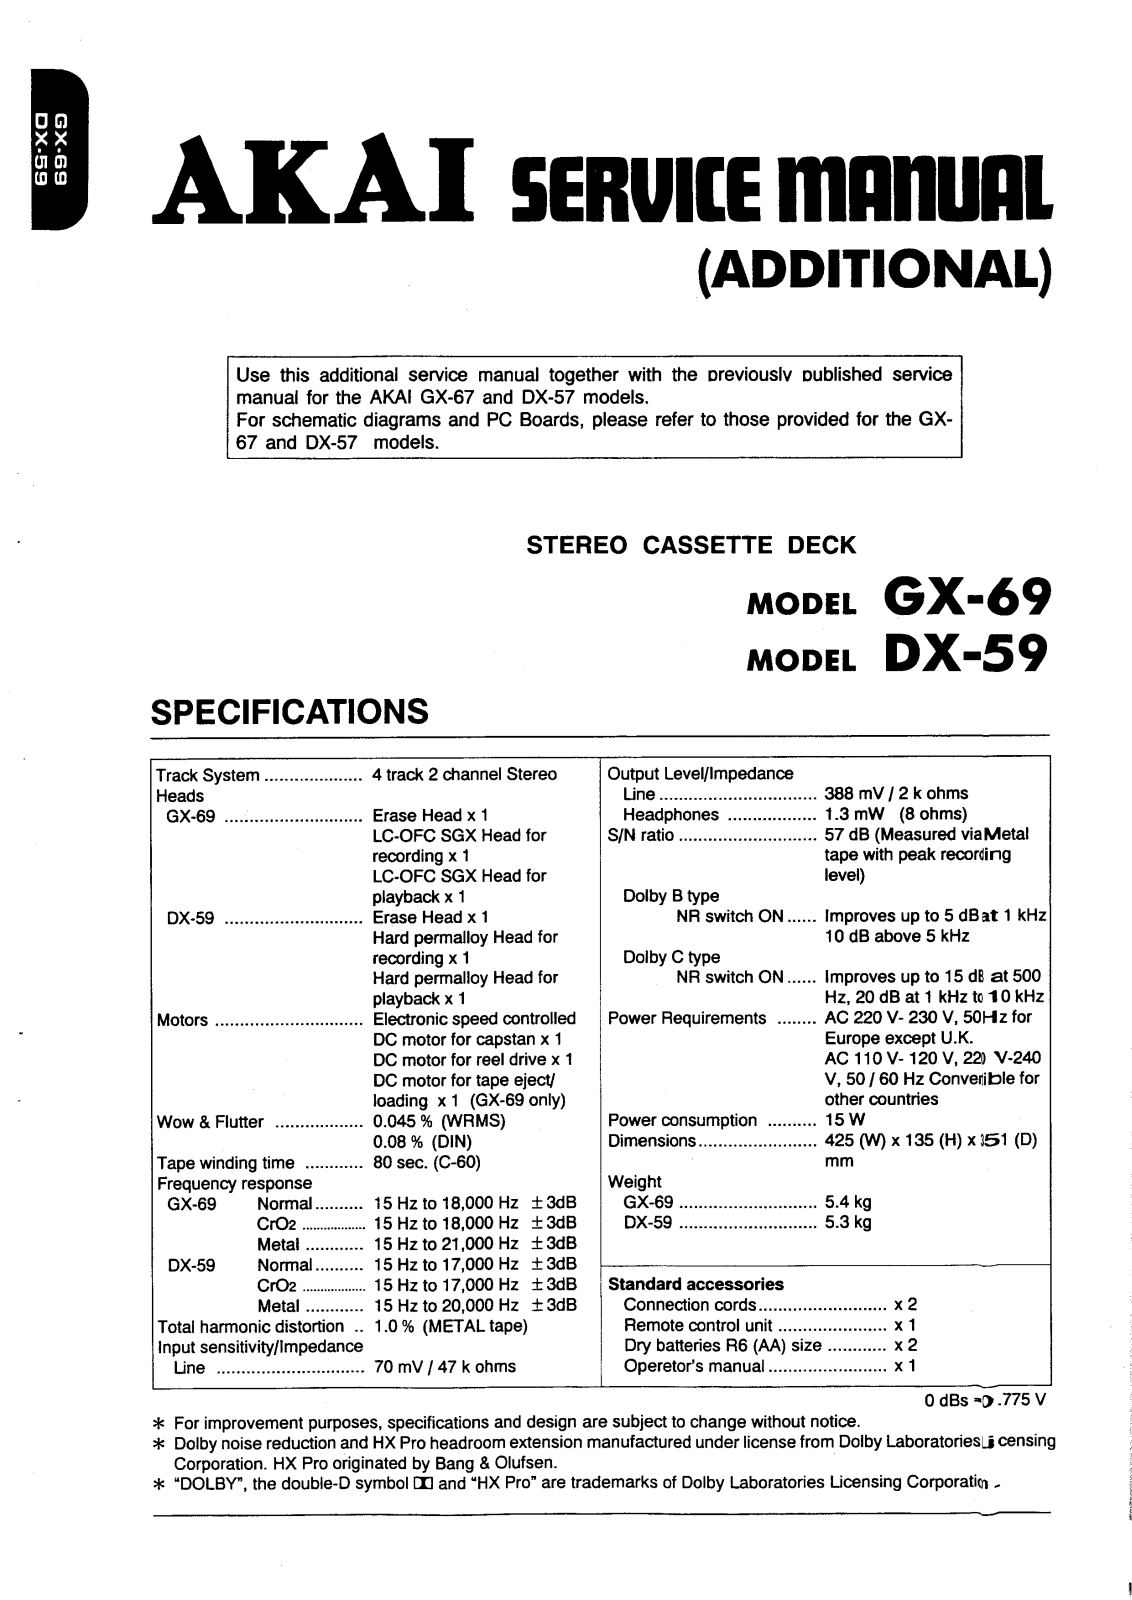 Akai GX-69, DX-59 Service manual